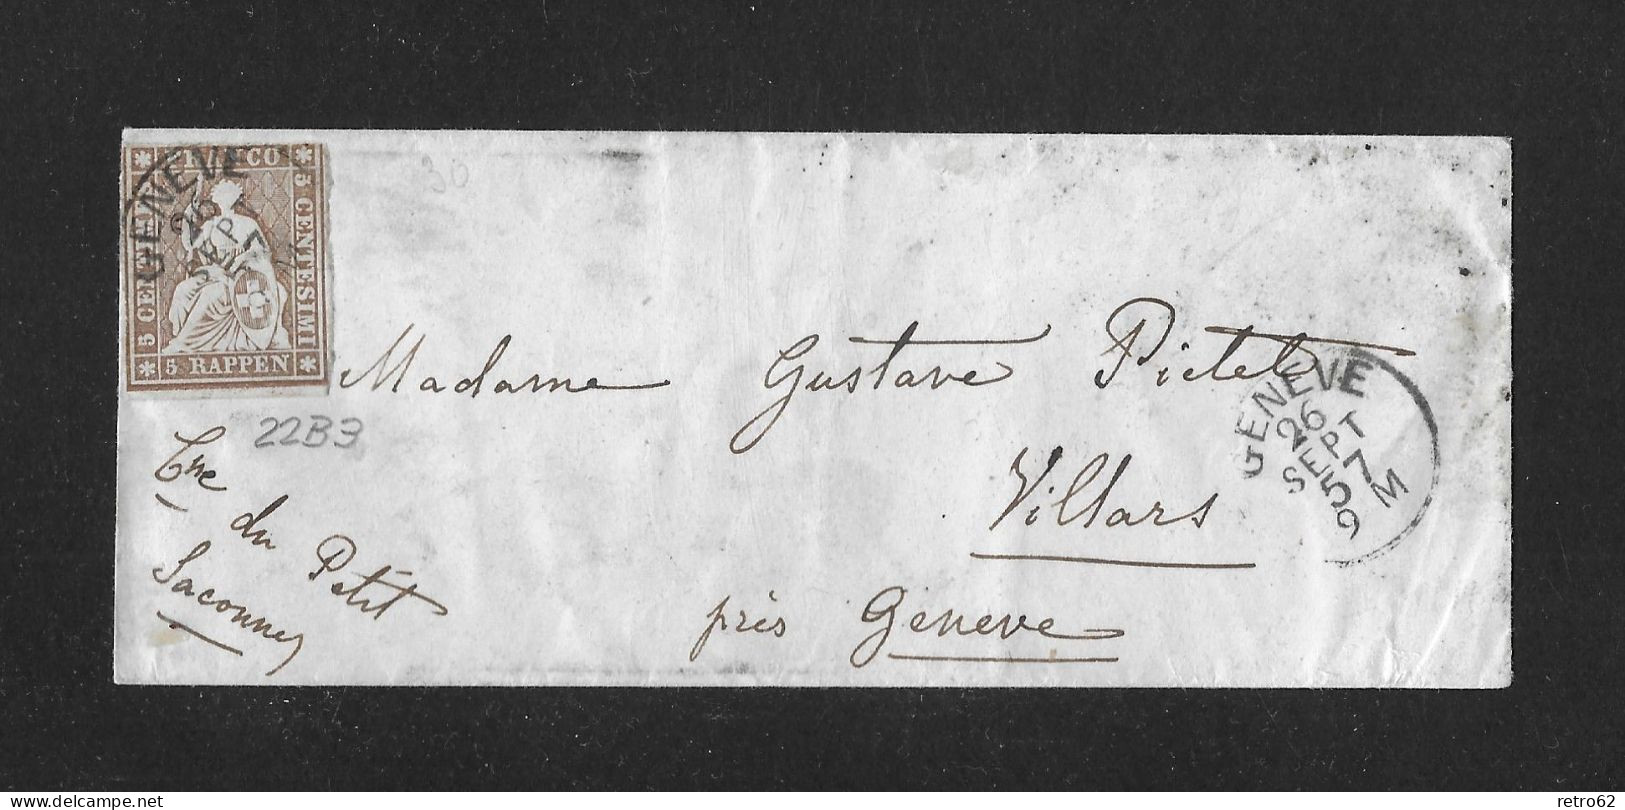 1857 HEIMAT GENÈVE ► Briefumschlag Von Genève Nach Villars    ►SBK-22B3 Grnève 26 SEPT 57 Guter Schnitt◄ - Covers & Documents